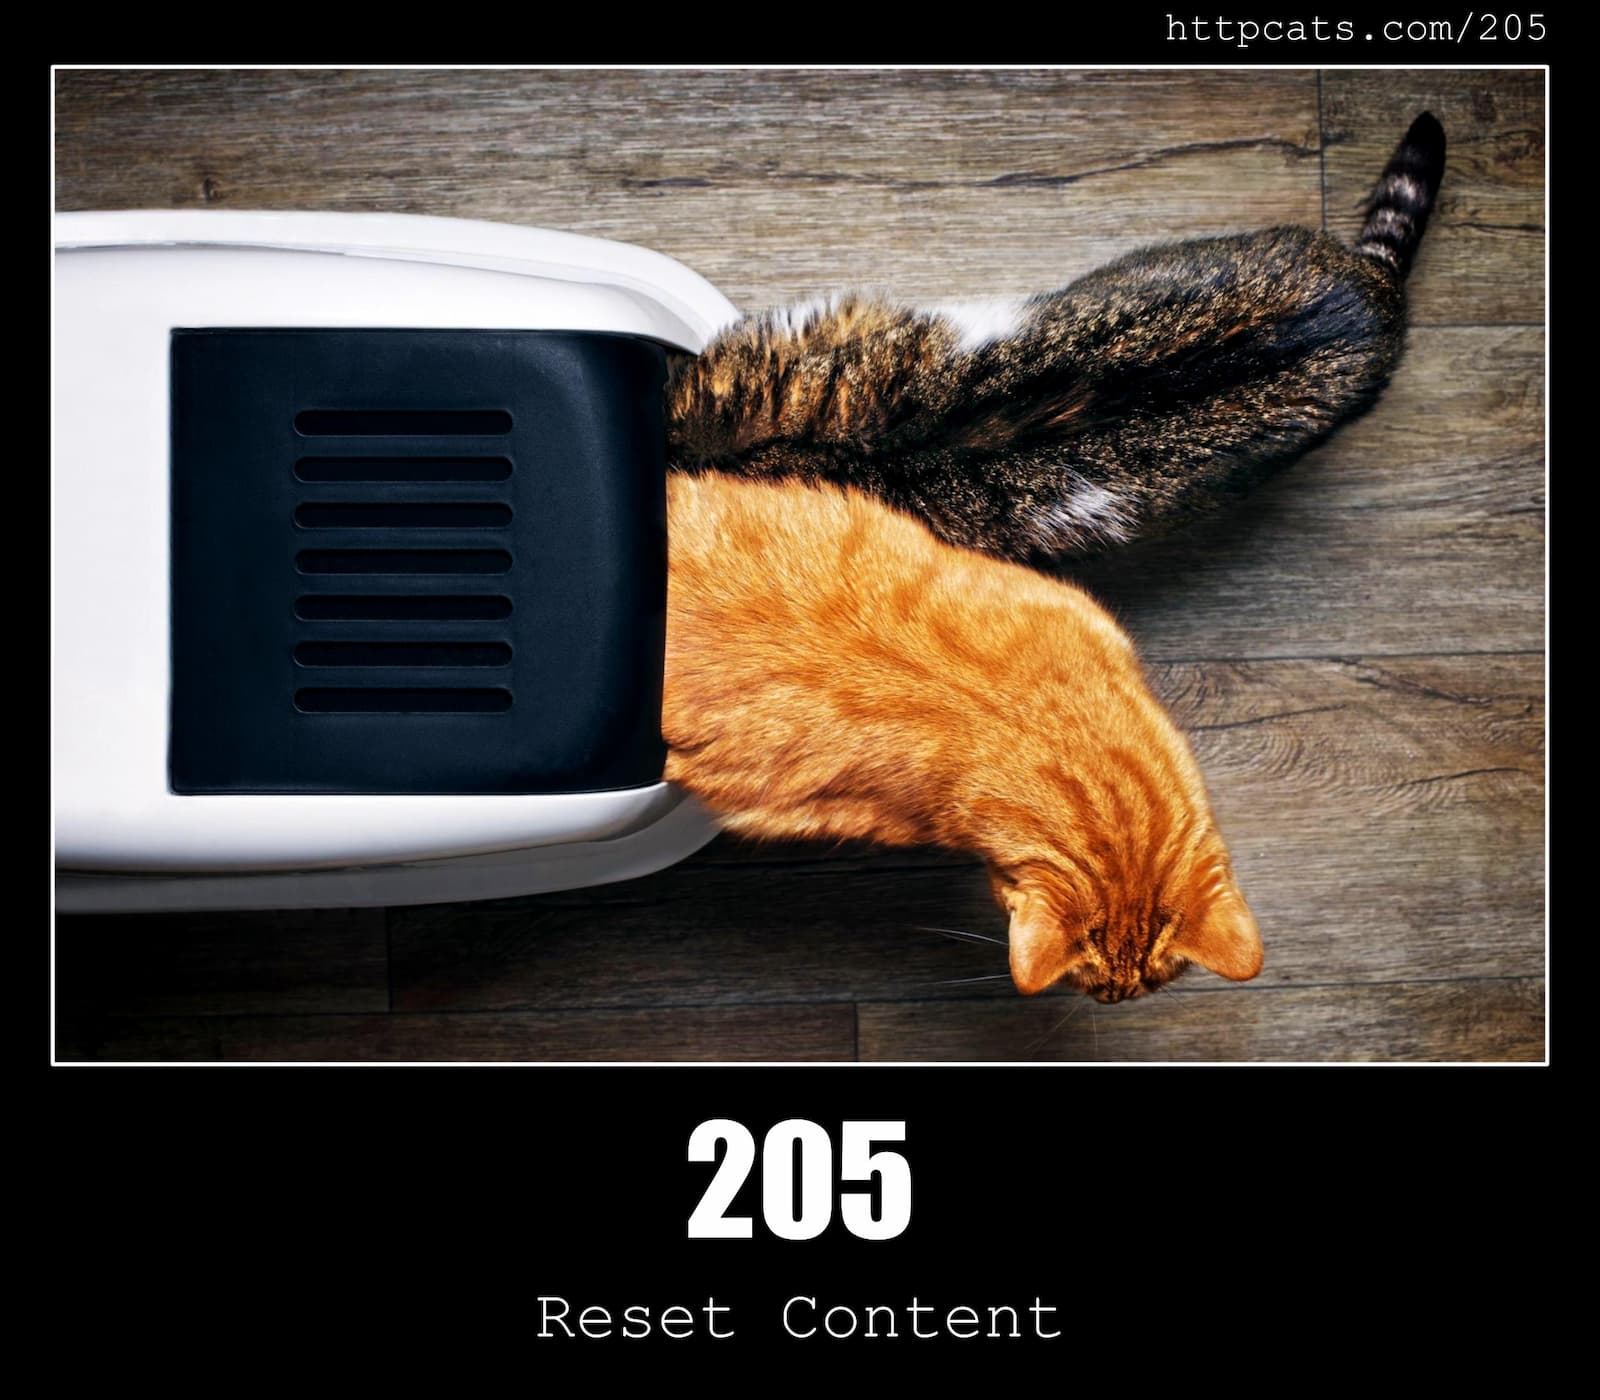 HTTP Status Code 205 Reset Content & Cats